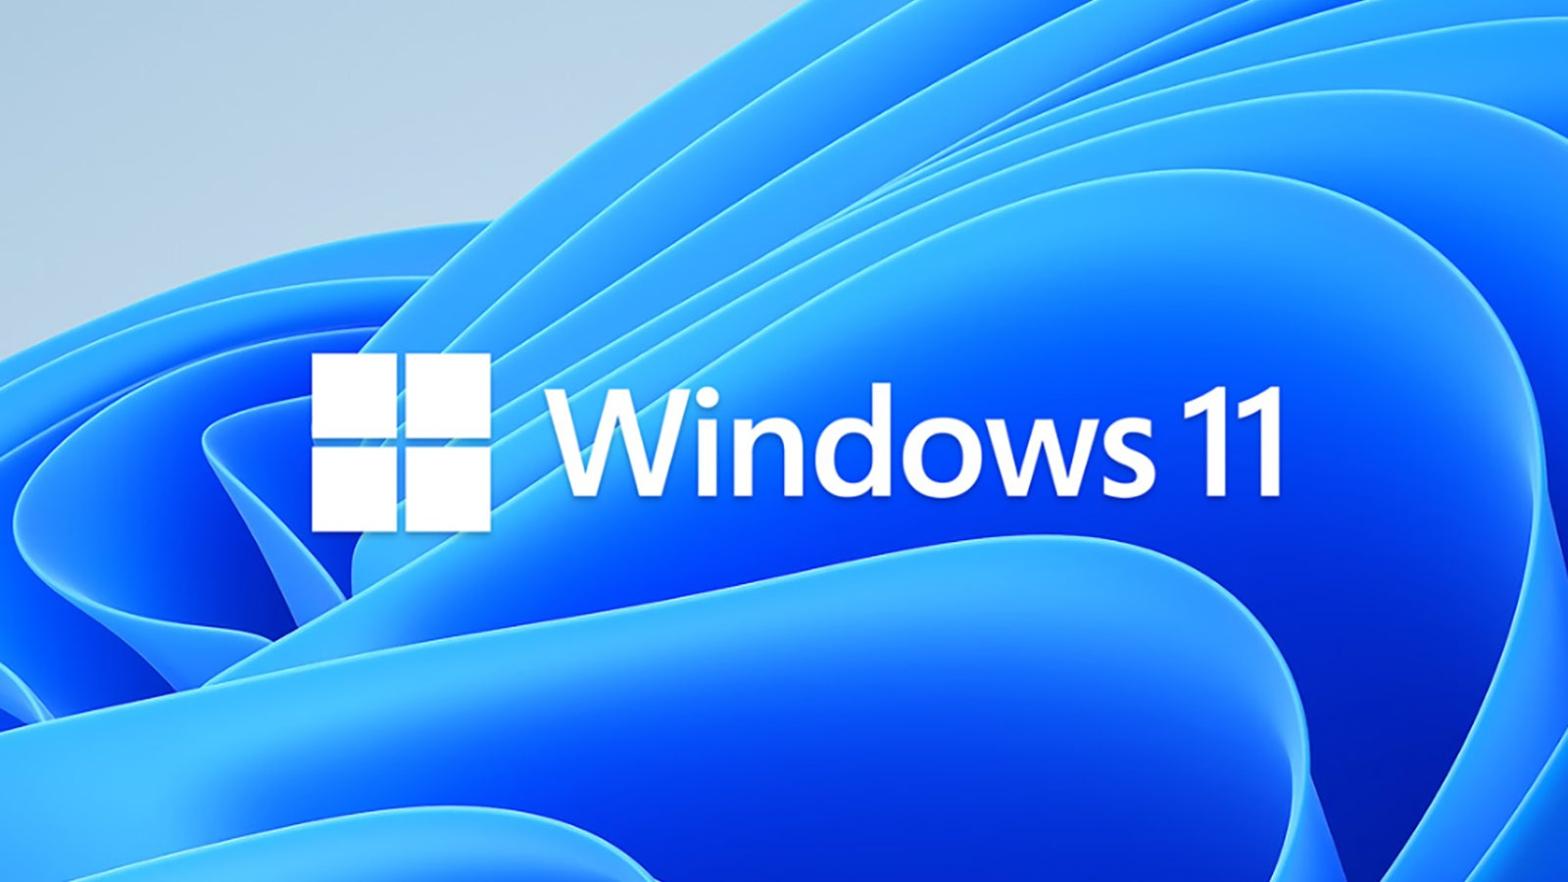 Windows 11 beta preview